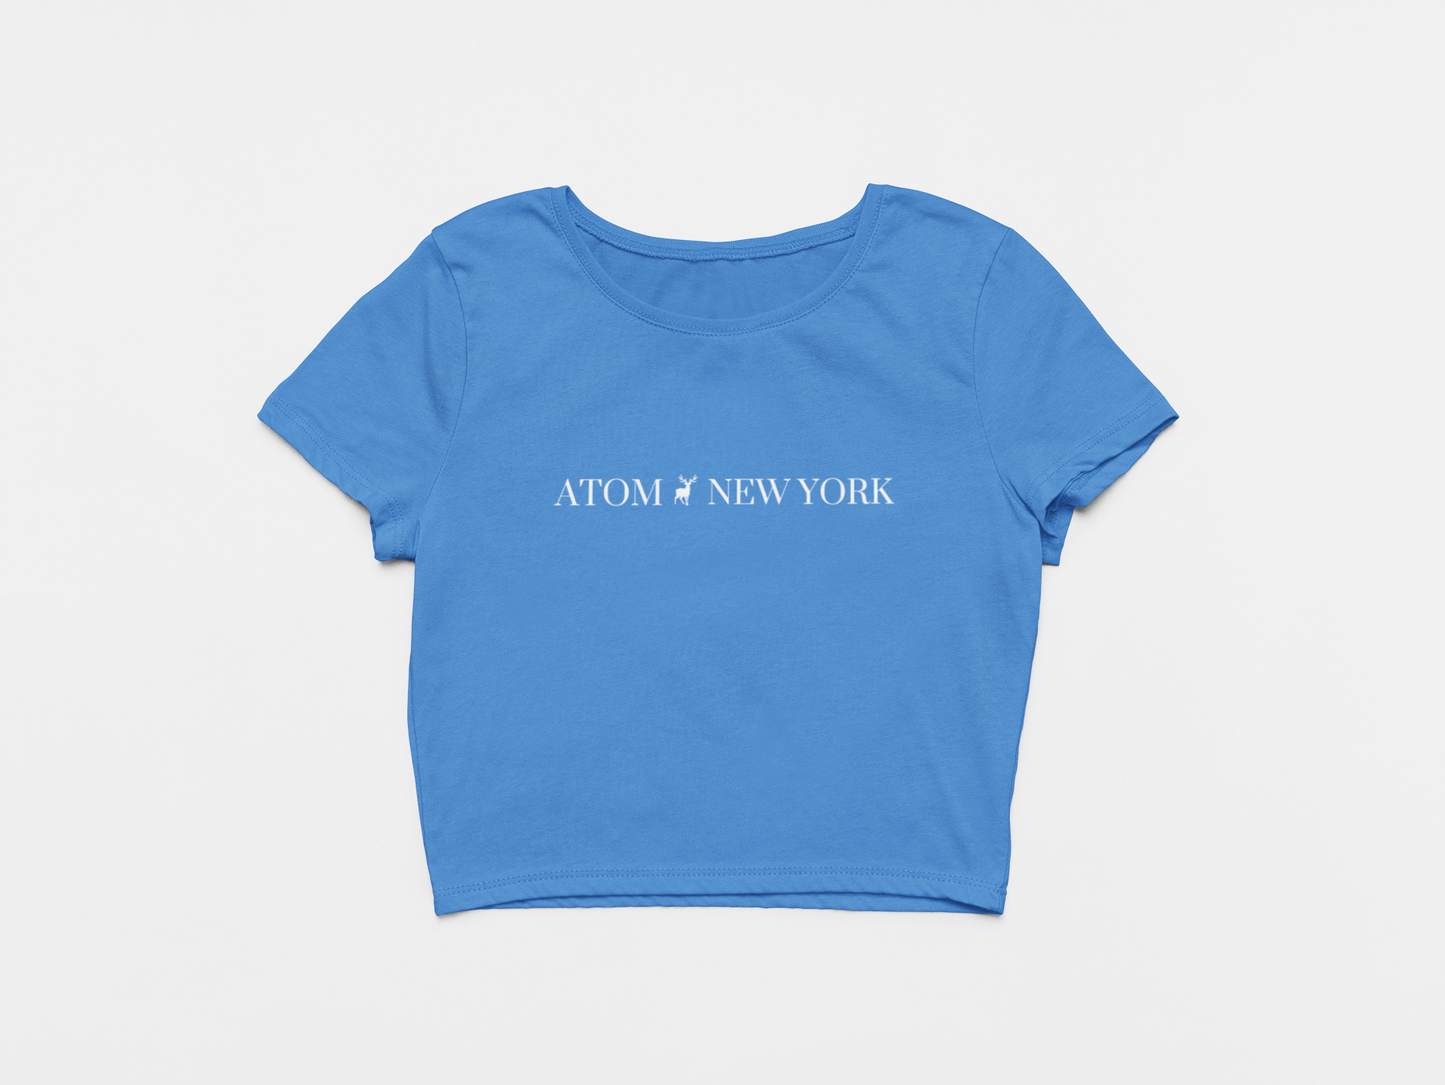 ATOM NEW YORK Signature Sky Blue Crop Top For Women